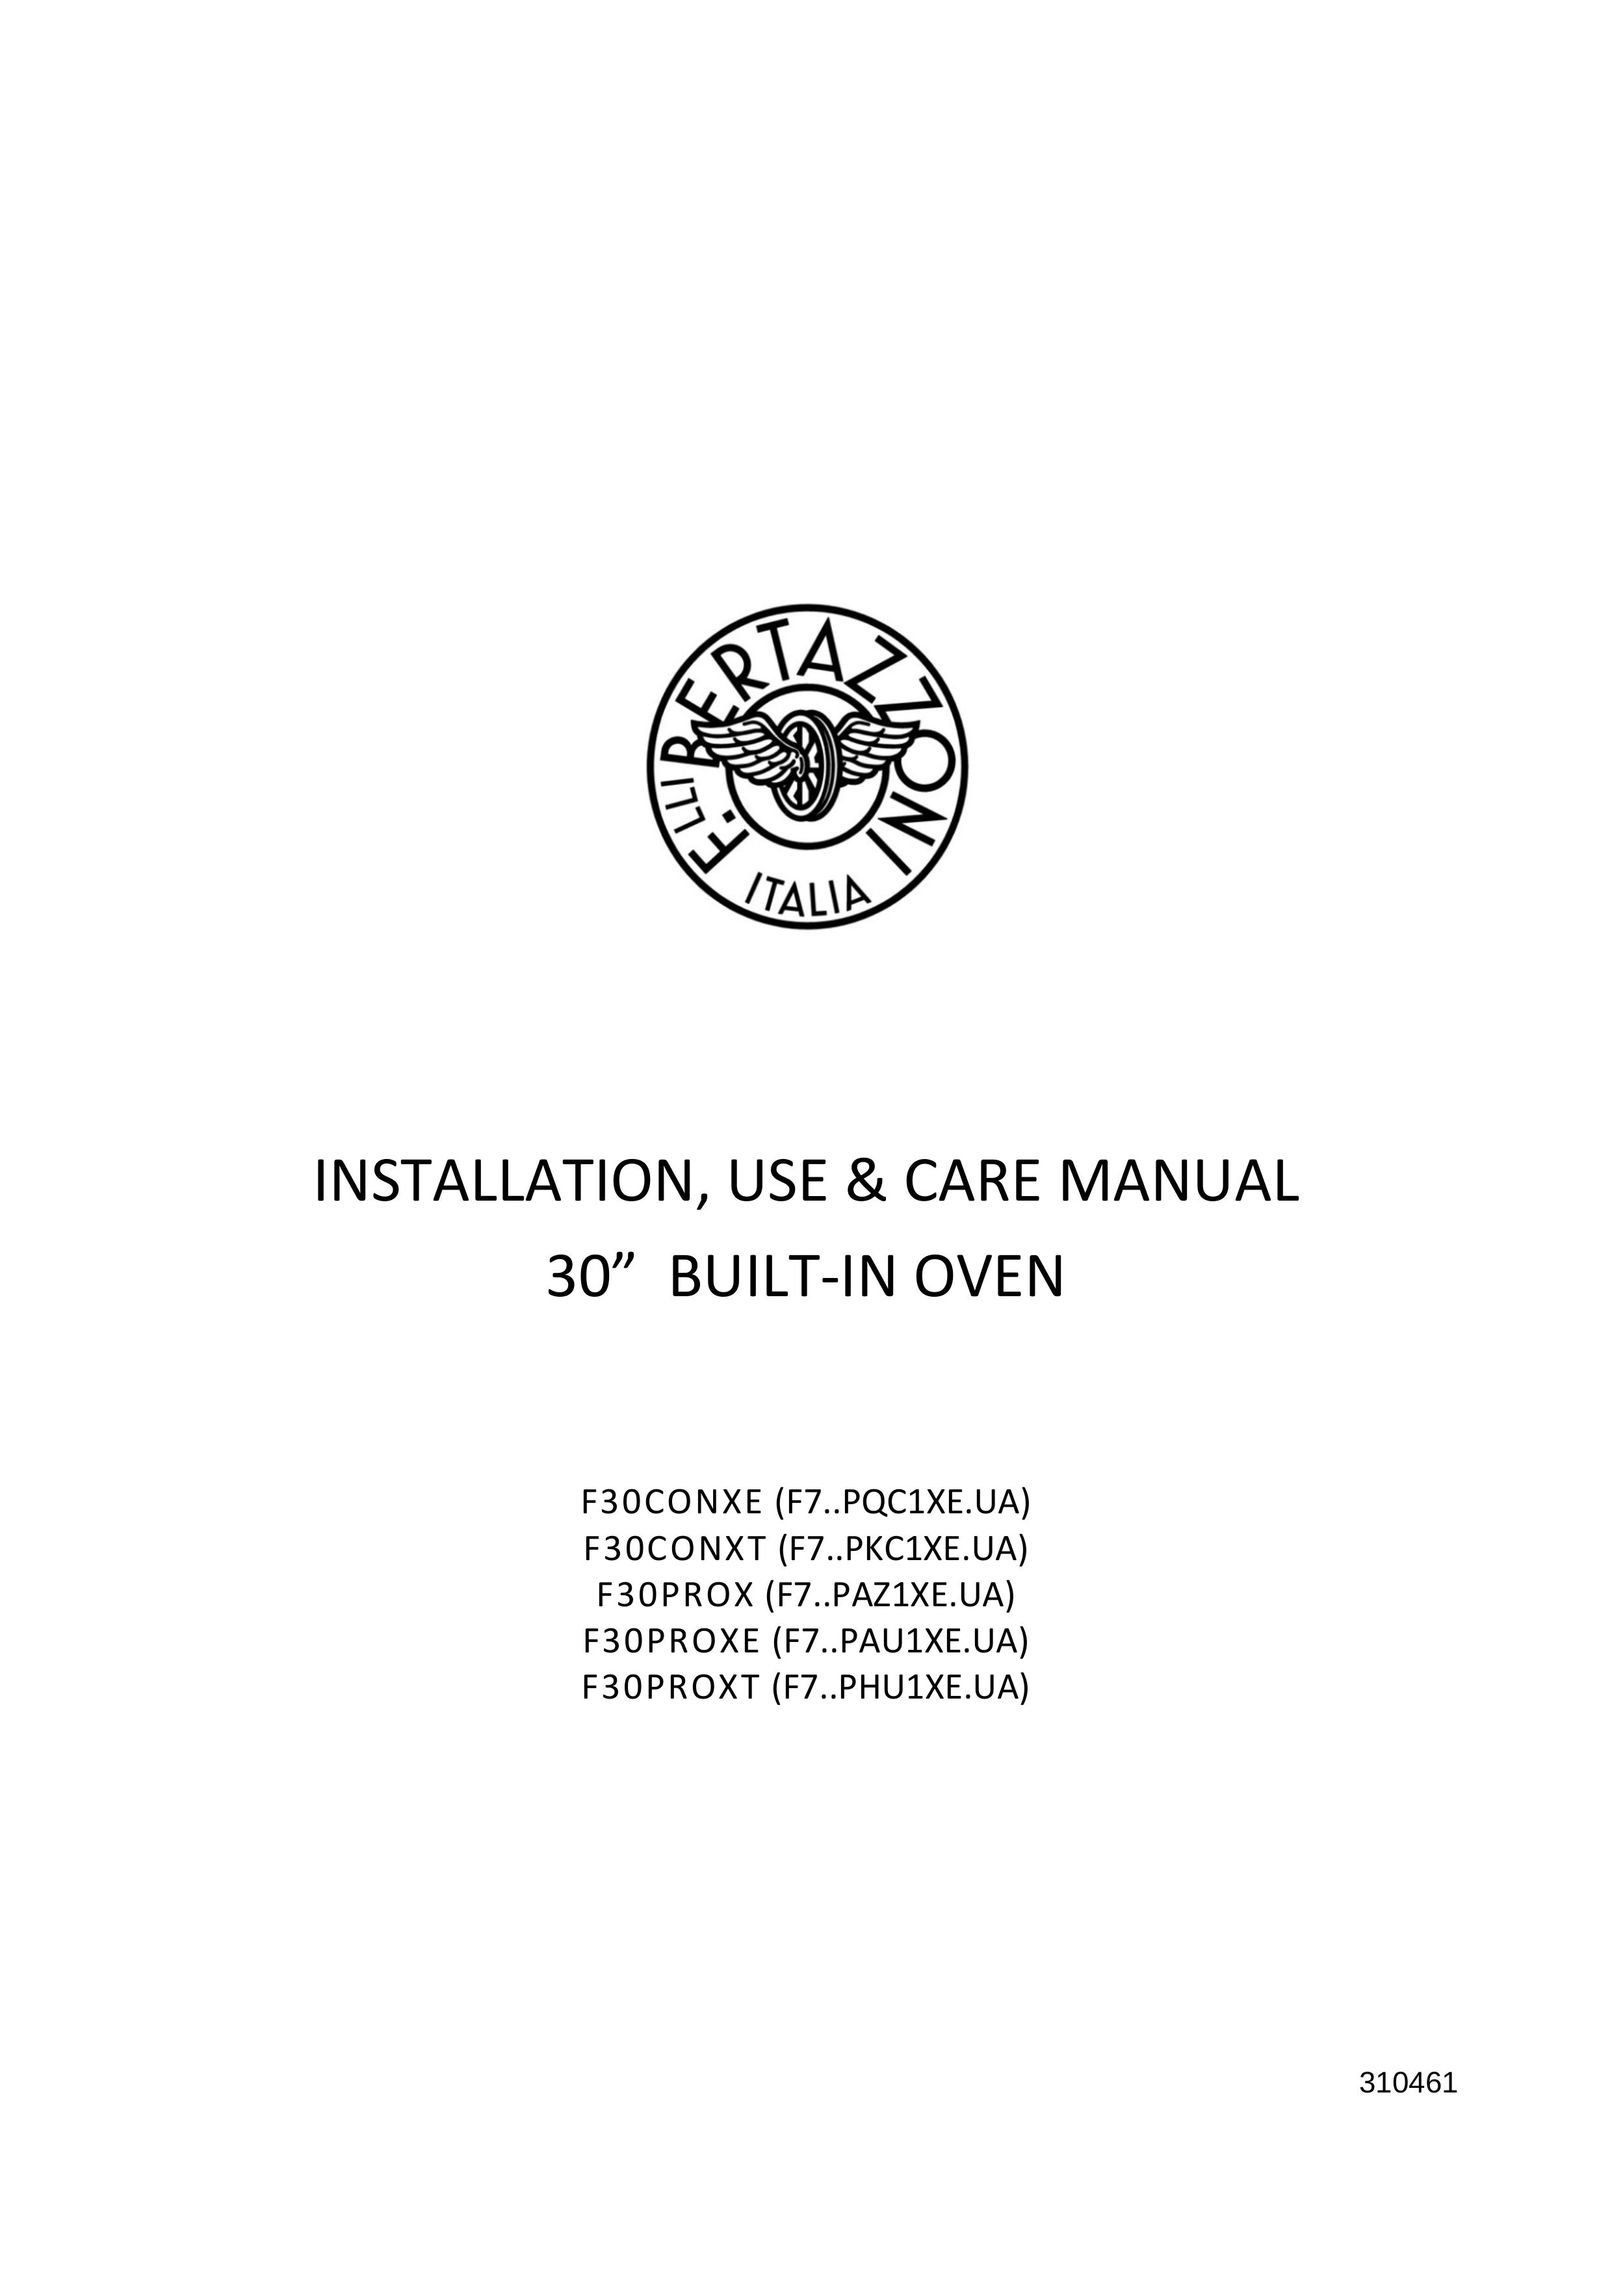 Bertazzoni F30PROXE Oven User Manual